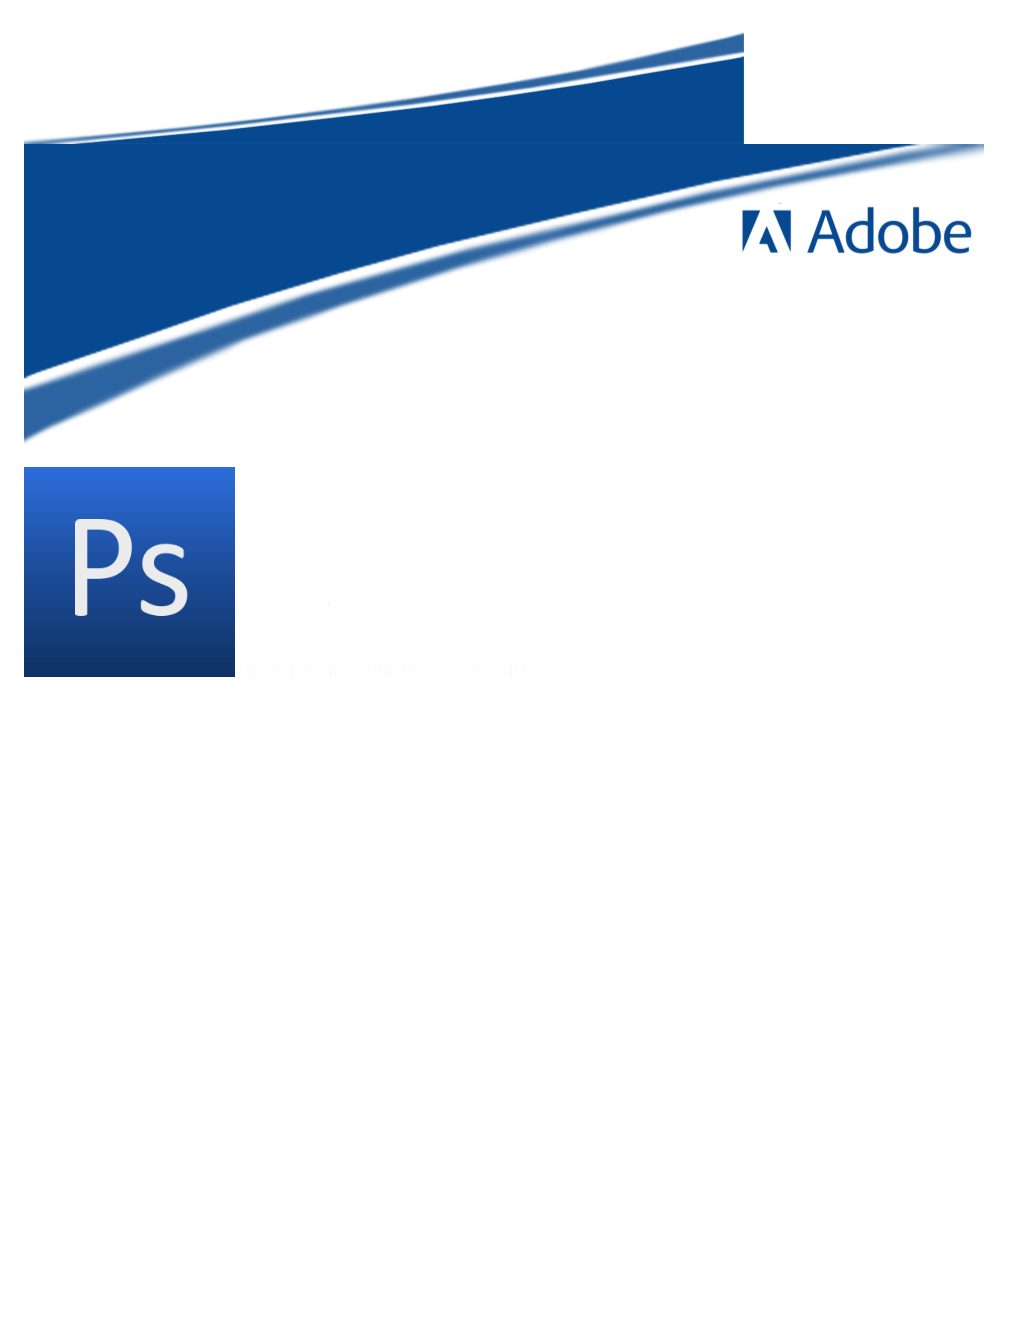 Adobe Photoshop CS5: Basics